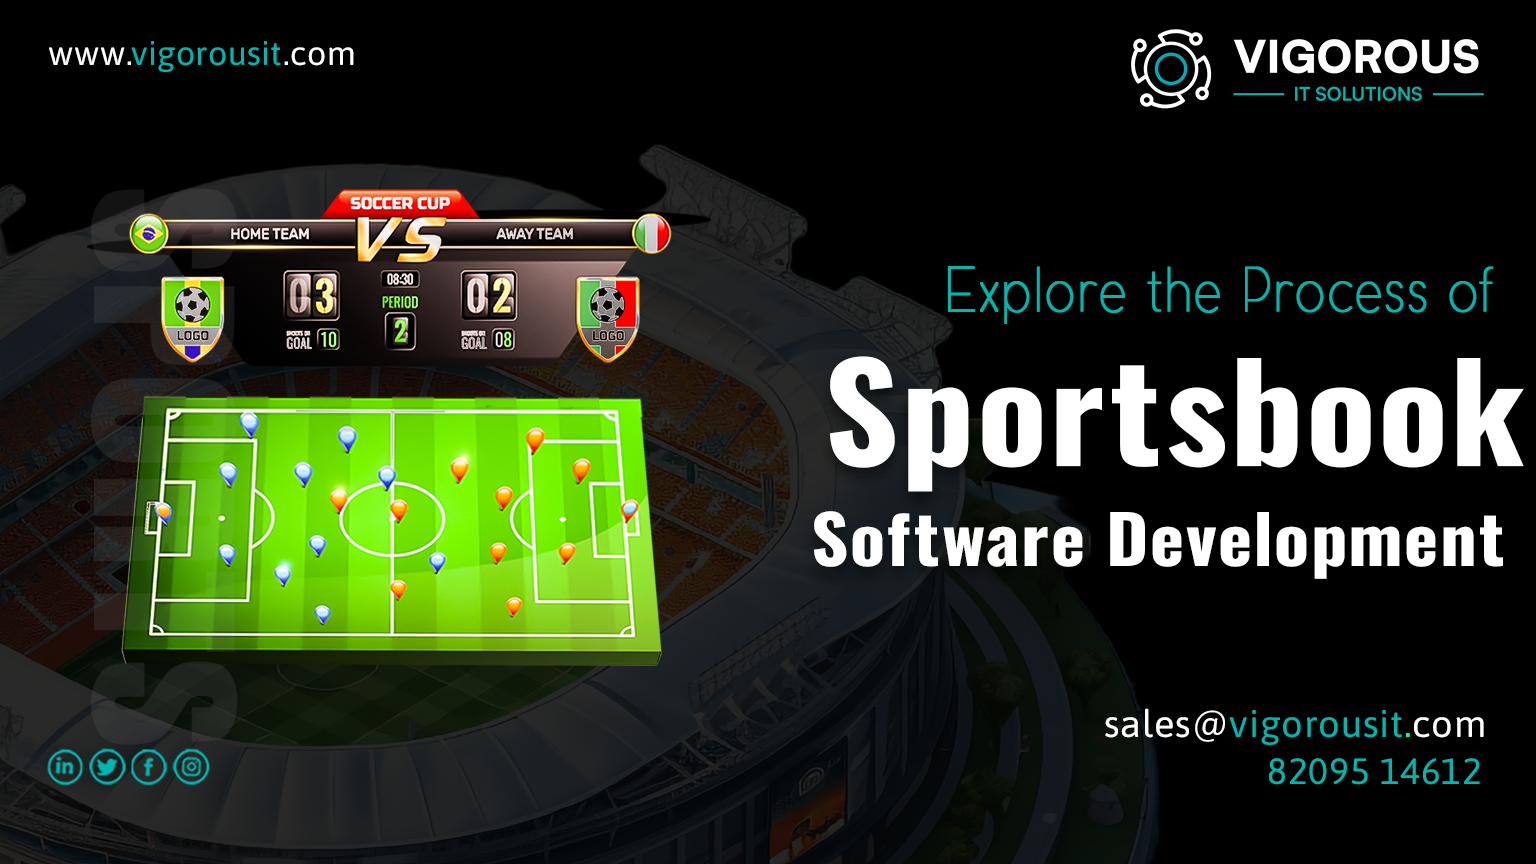 Explore the Process of Sportsbook Software Development